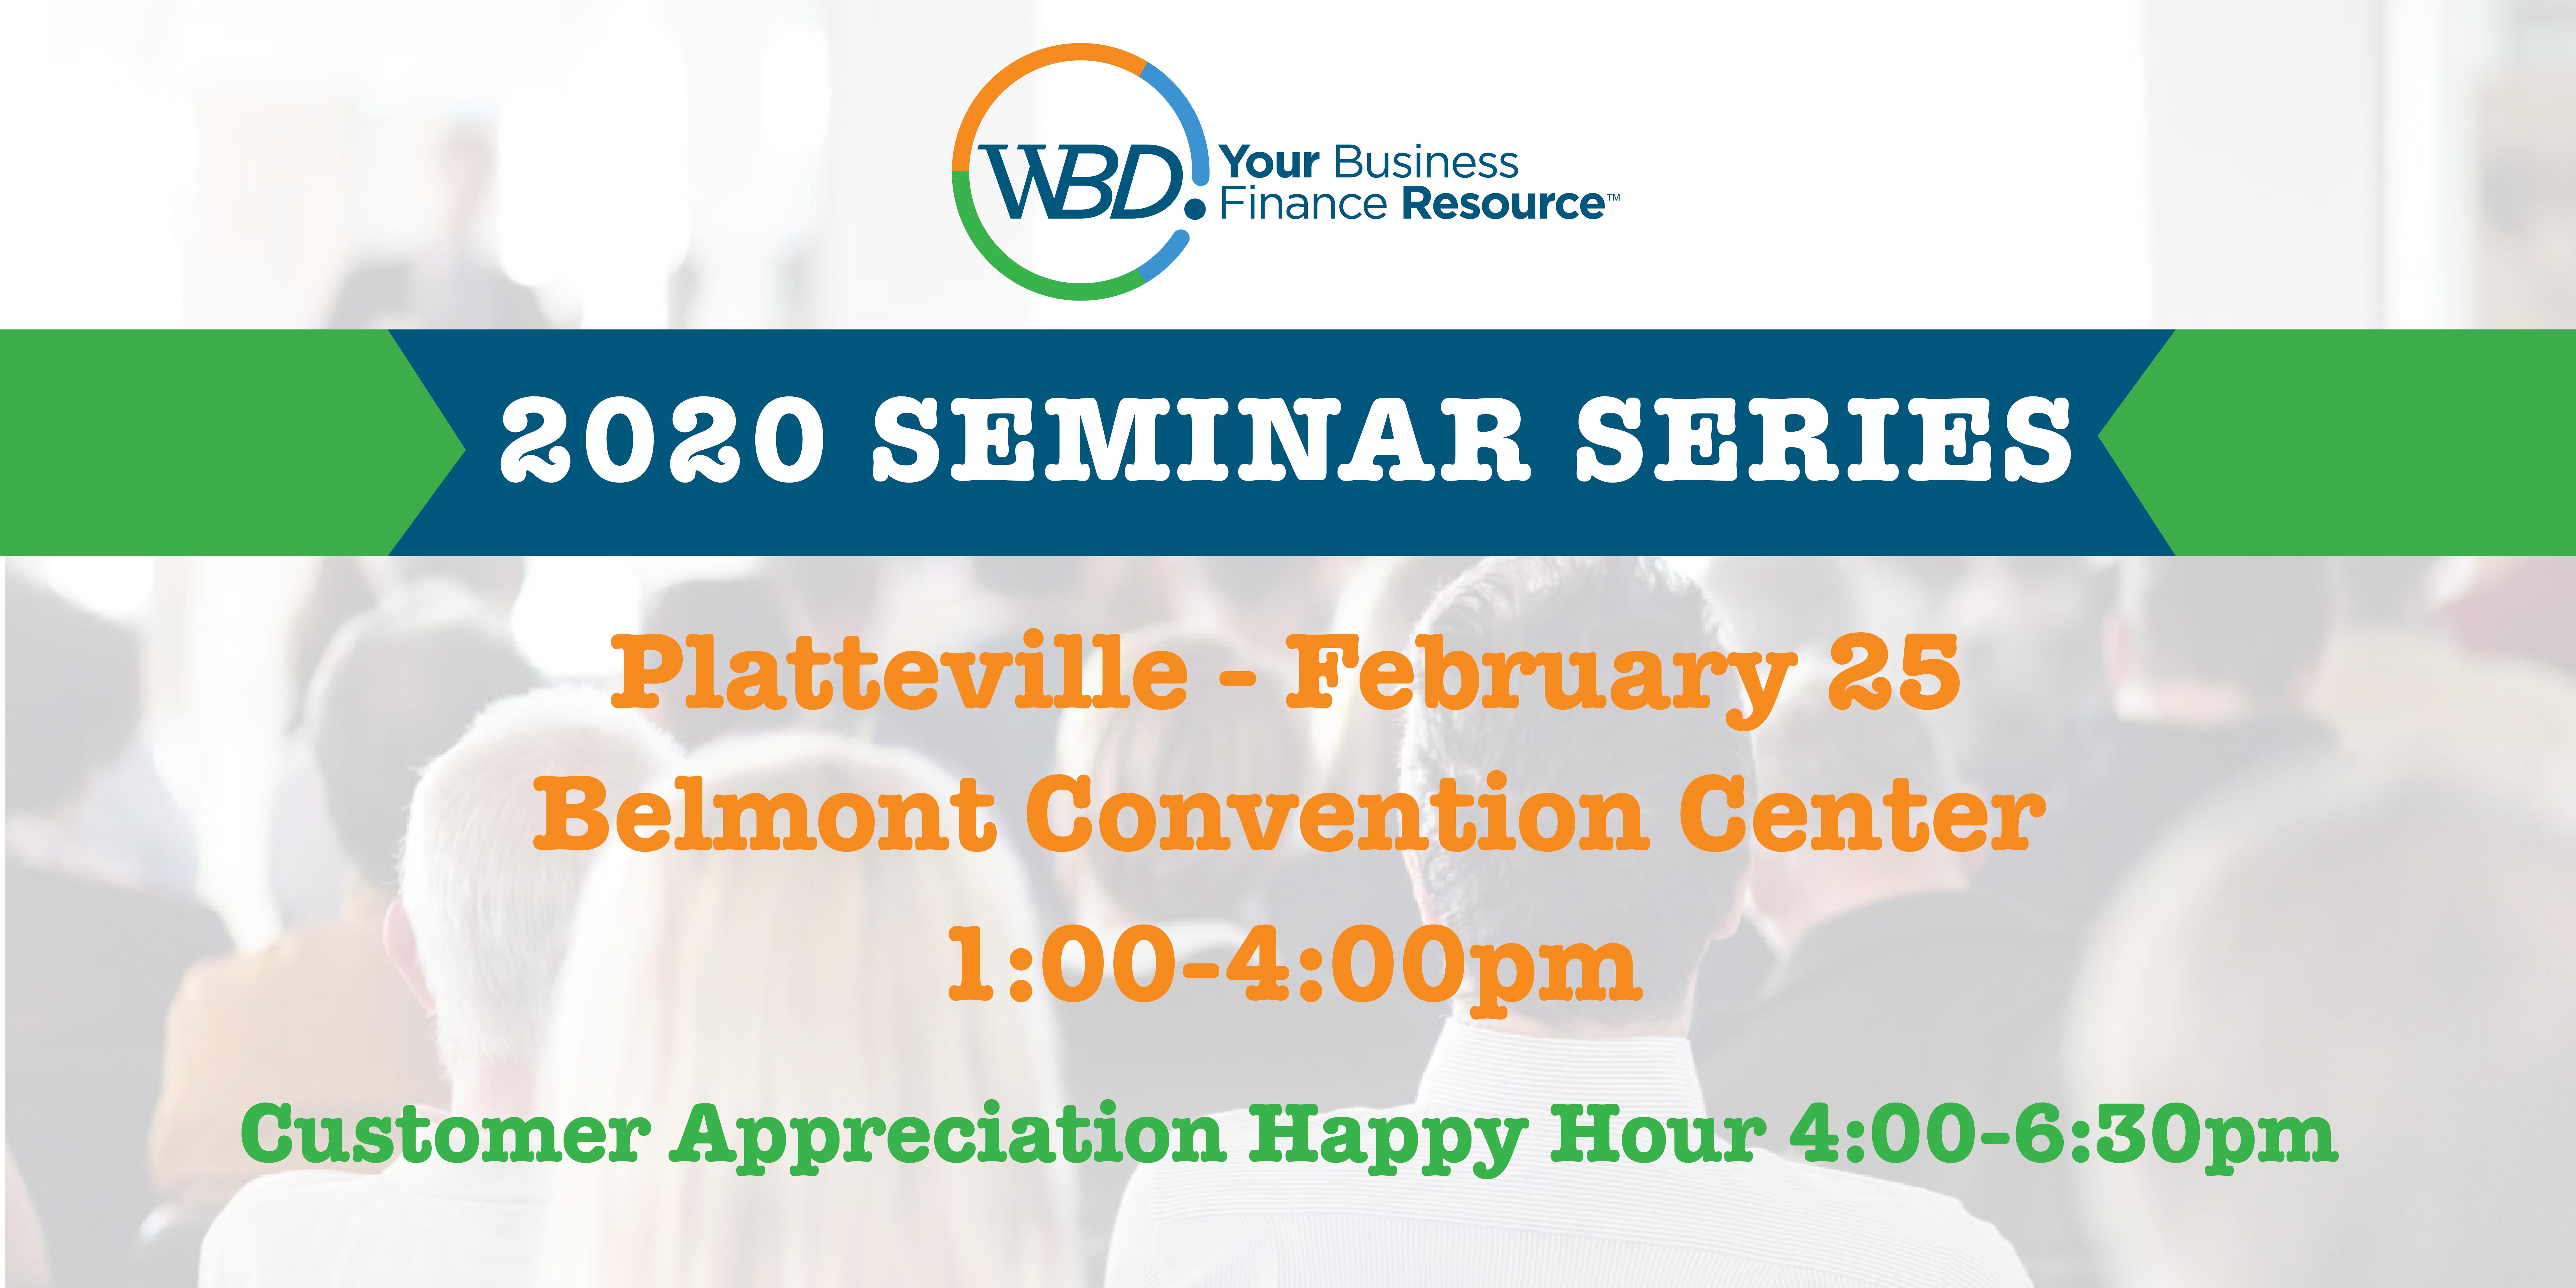 WBD 2020 Seminar Series - Platteville